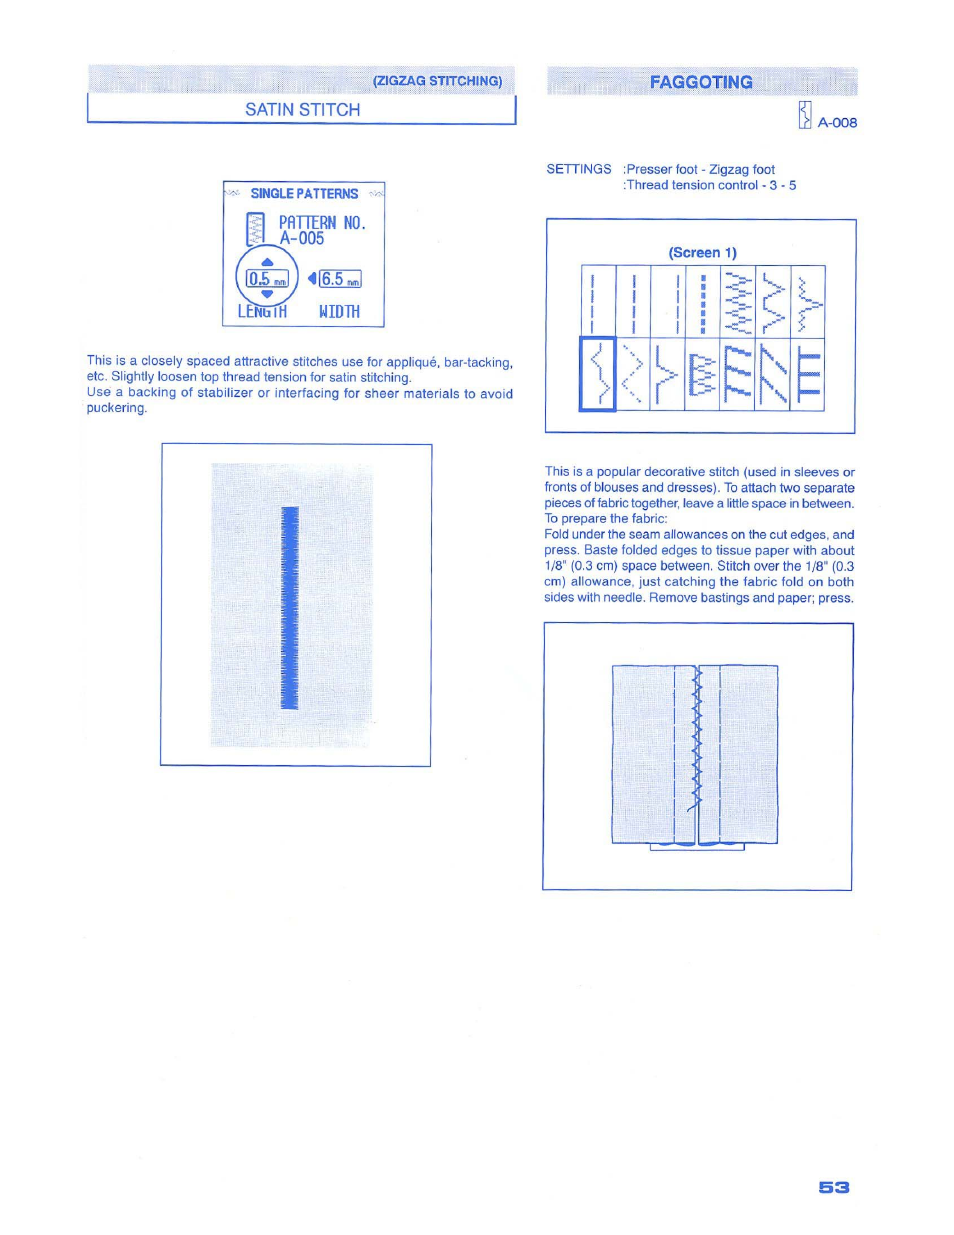 Satin stitch, Pattern no. a-005, Iobj i 4(1z lerirrh hidth | SINGER 1500 Izek User Manual | Page 55 / 70